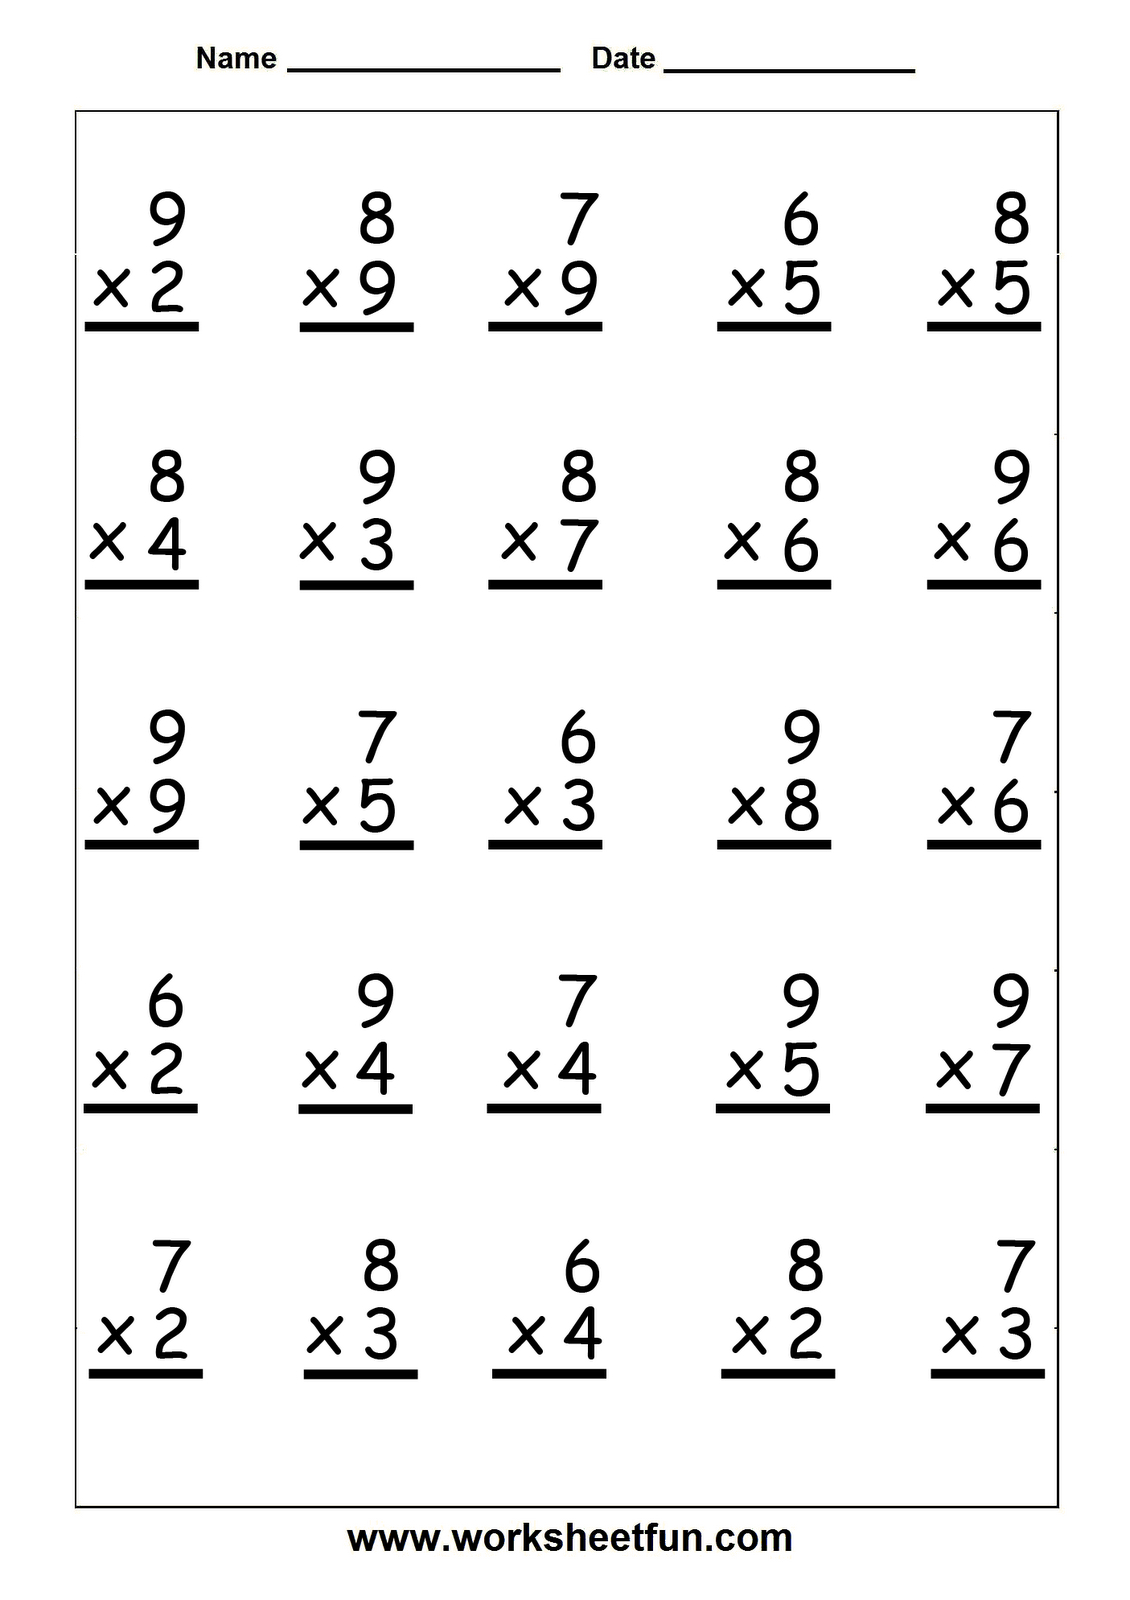 Free Printable Multiplication Worksheets | Multiplication regarding Printable Multiplication Worksheets 2S